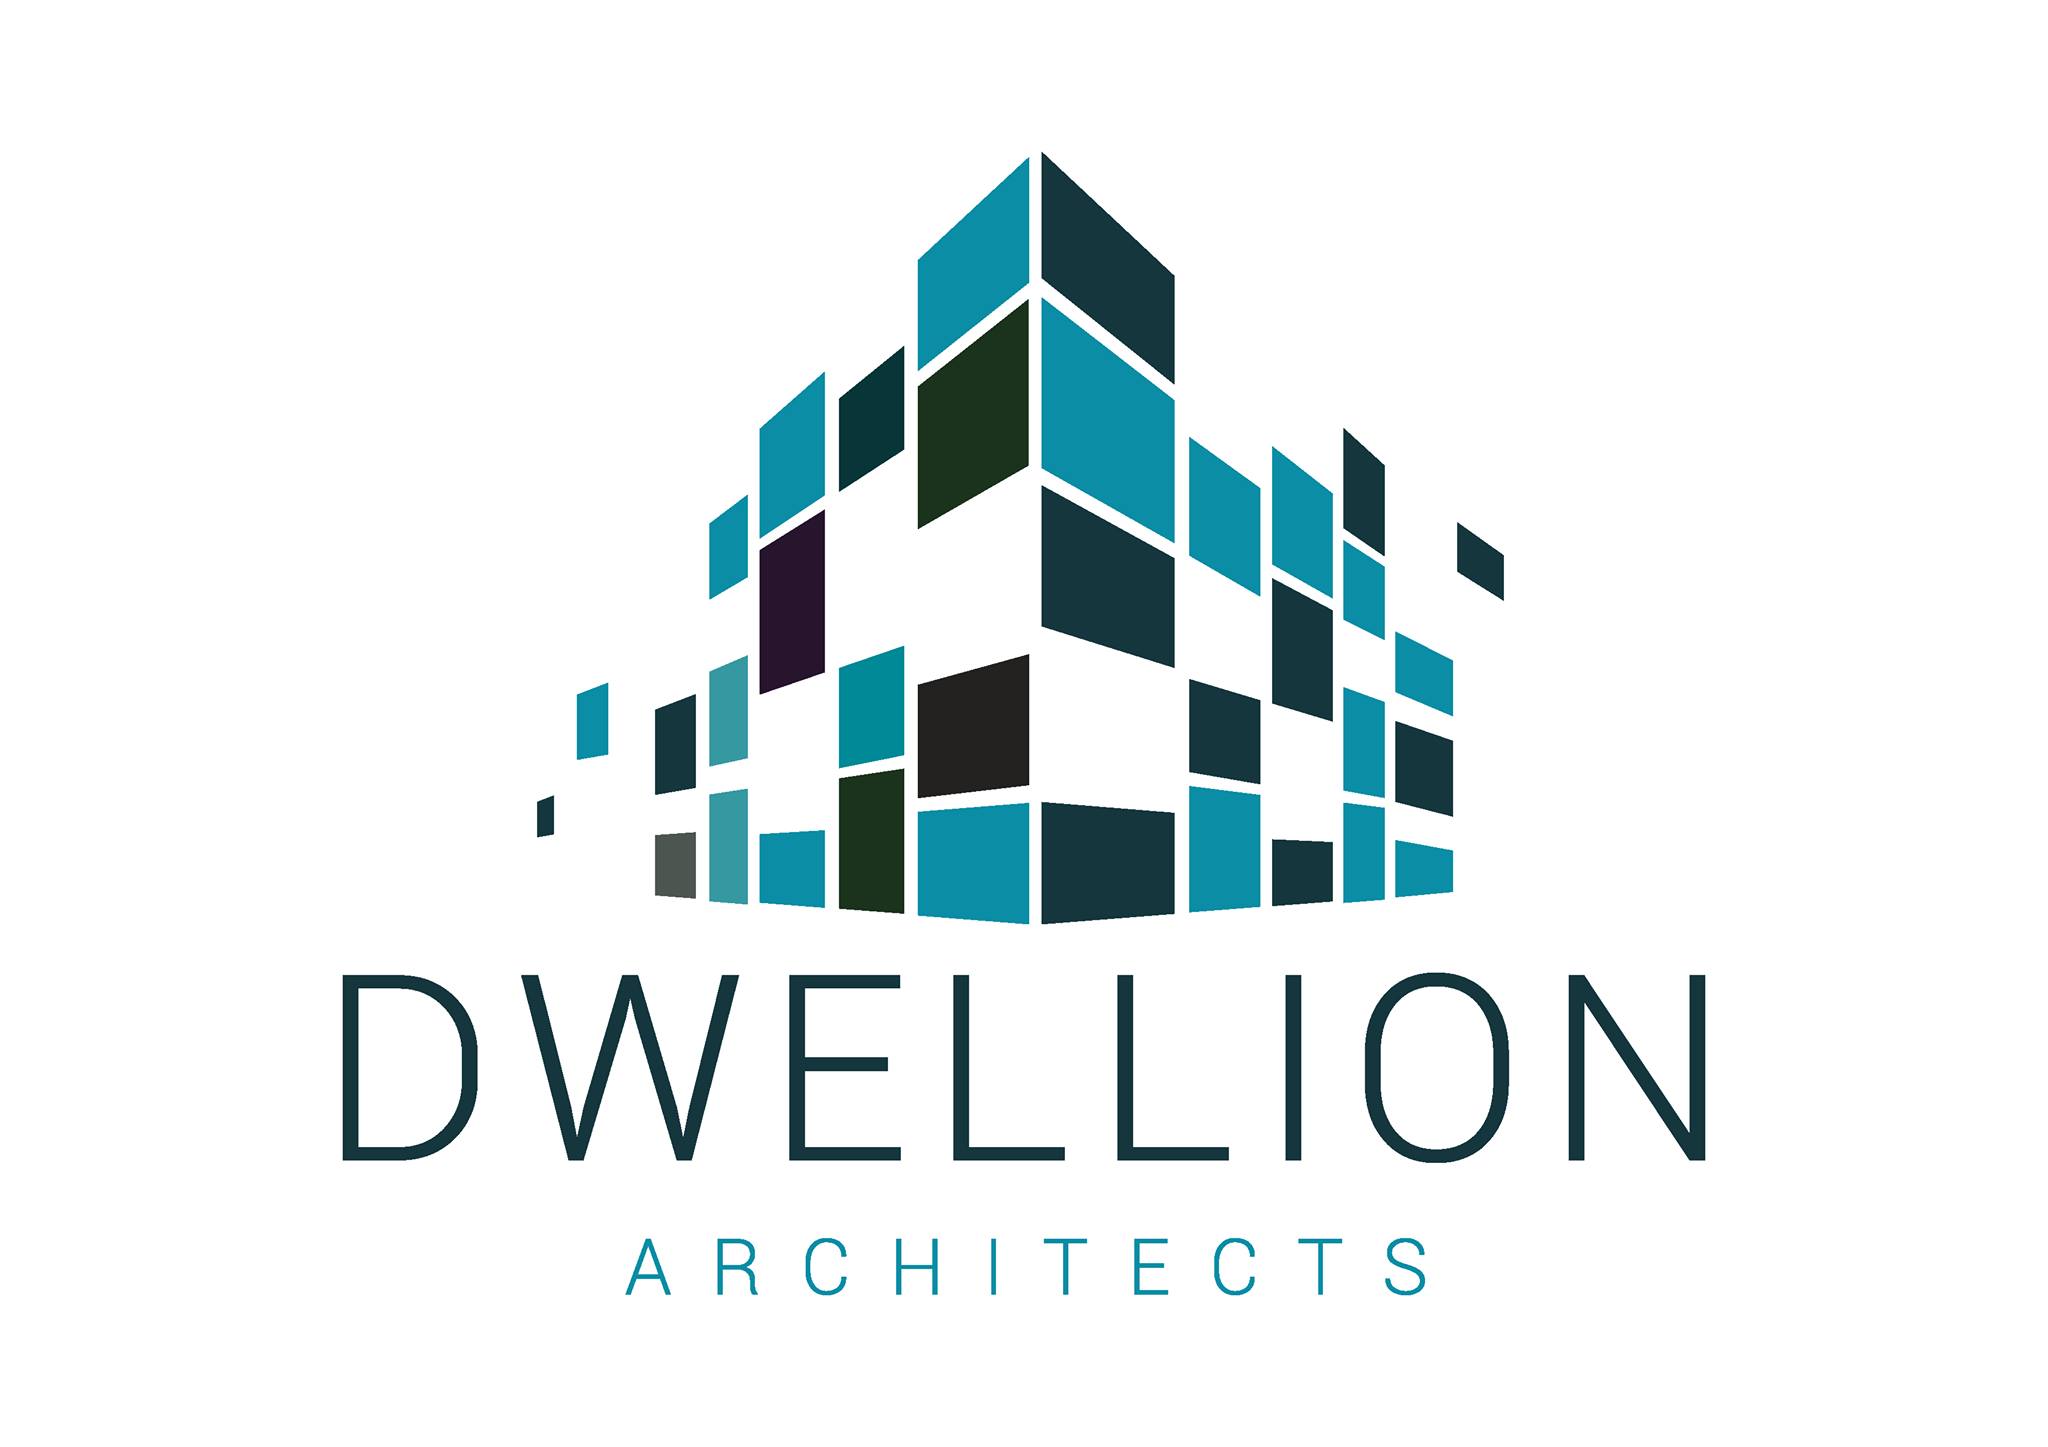 Dwellion Architecture & Interior Design|Legal Services|Professional Services